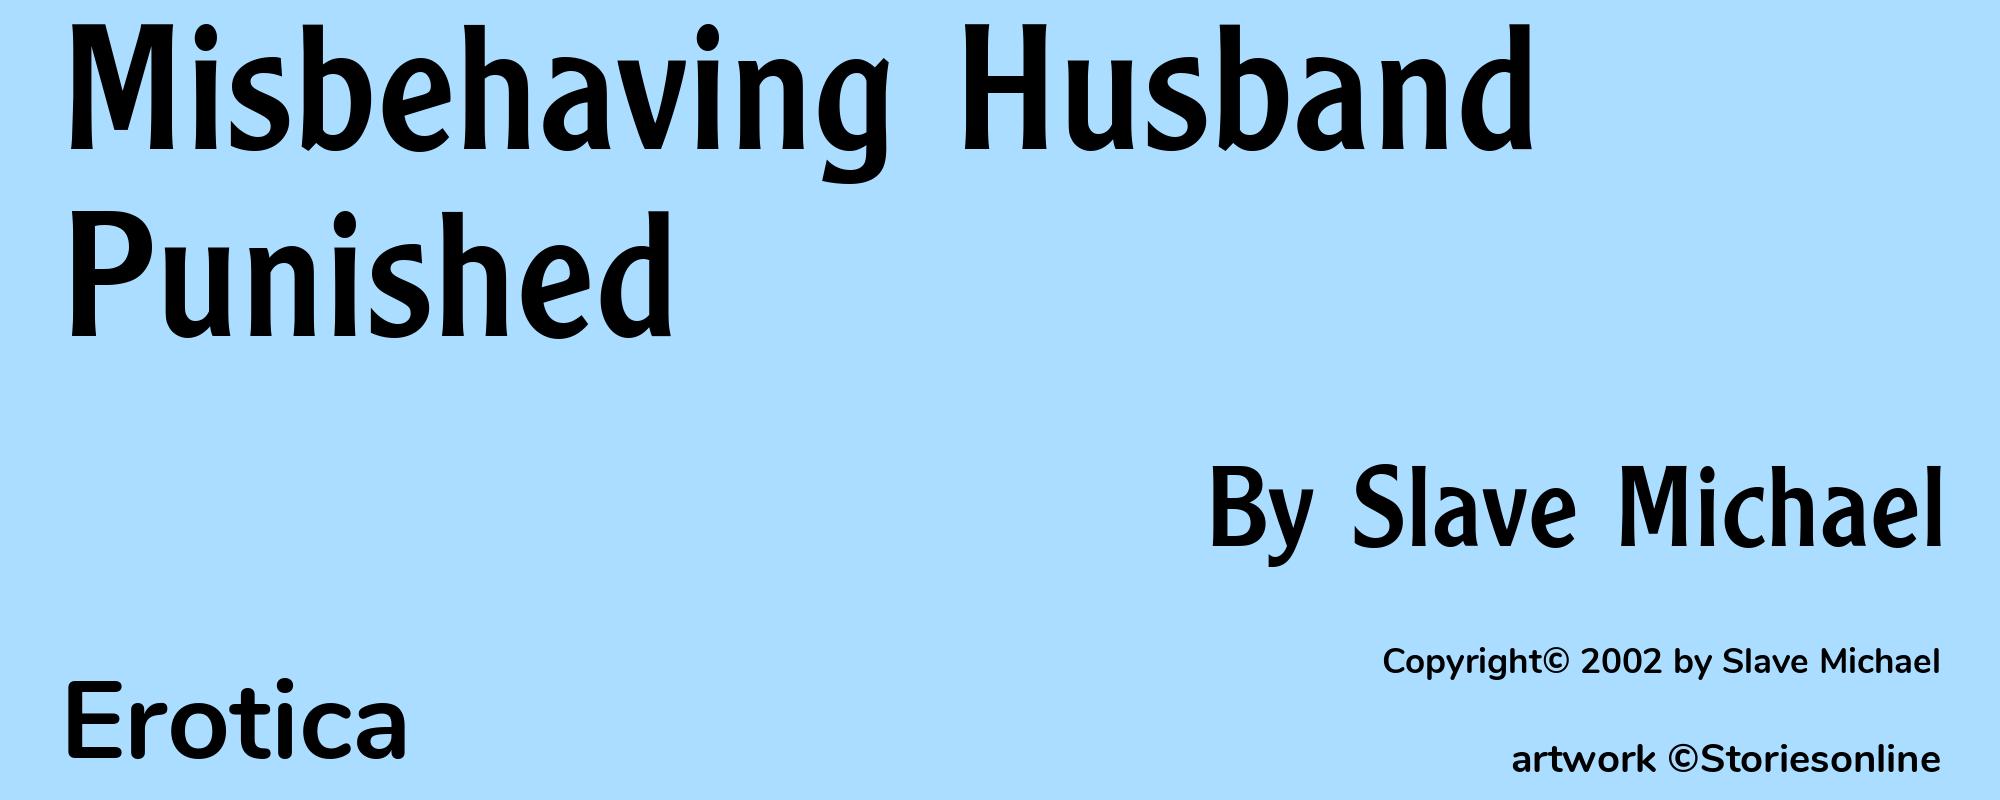 Misbehaving Husband Punished - Cover